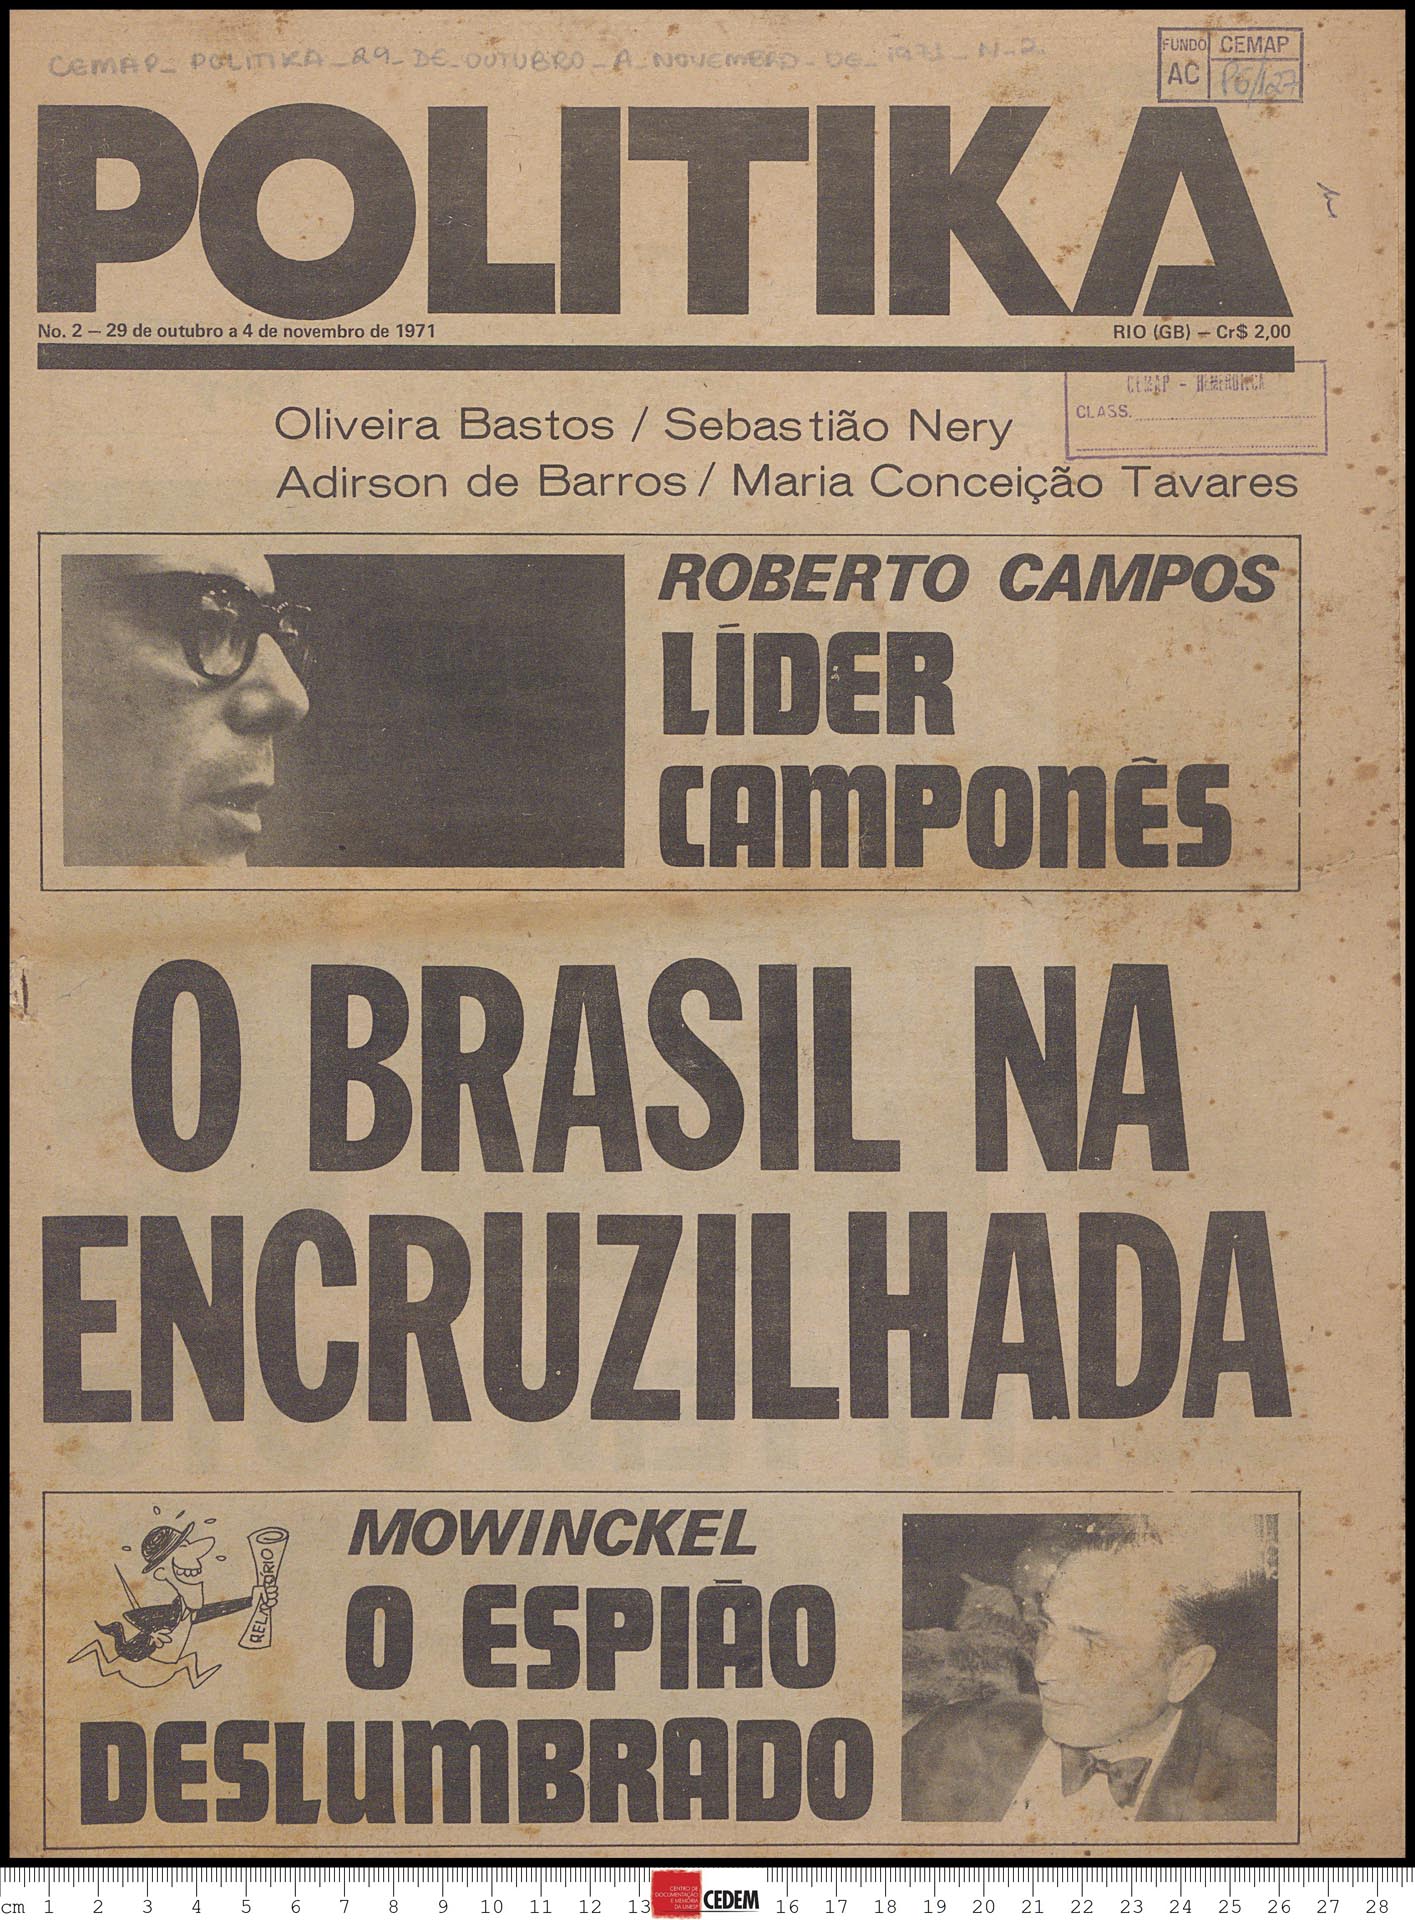 Politika - 2 - 29 de out. a 4 de nov. 1971